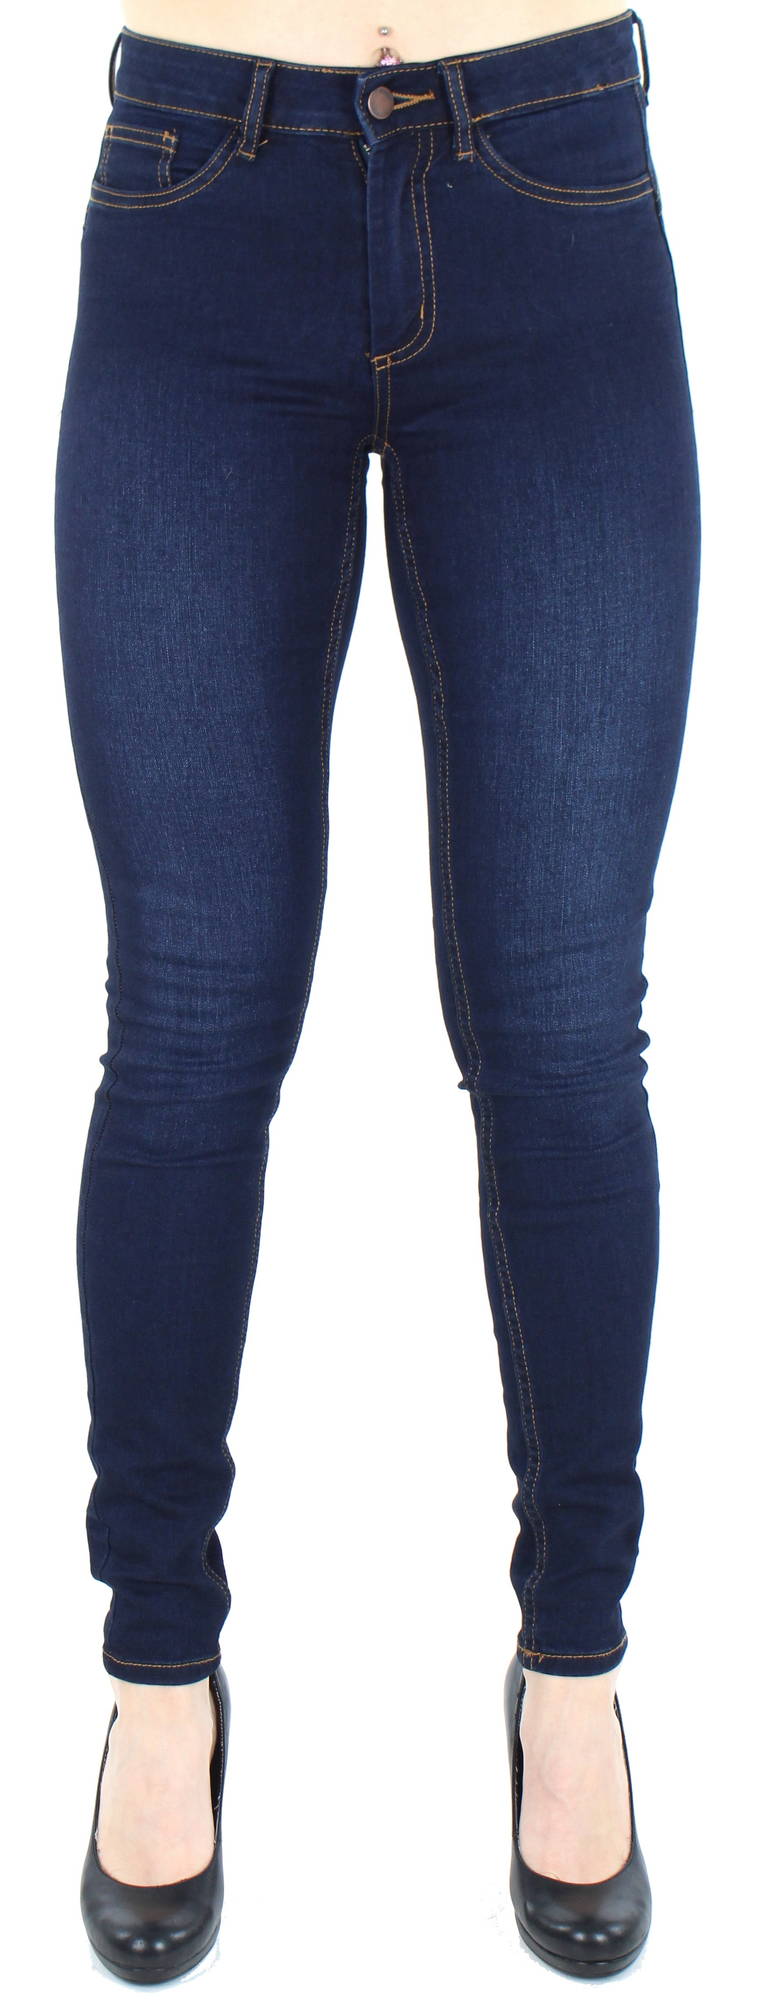 Pieces Jeans Shape up V362, Dark Blue - Stilettoshop.eu webstore